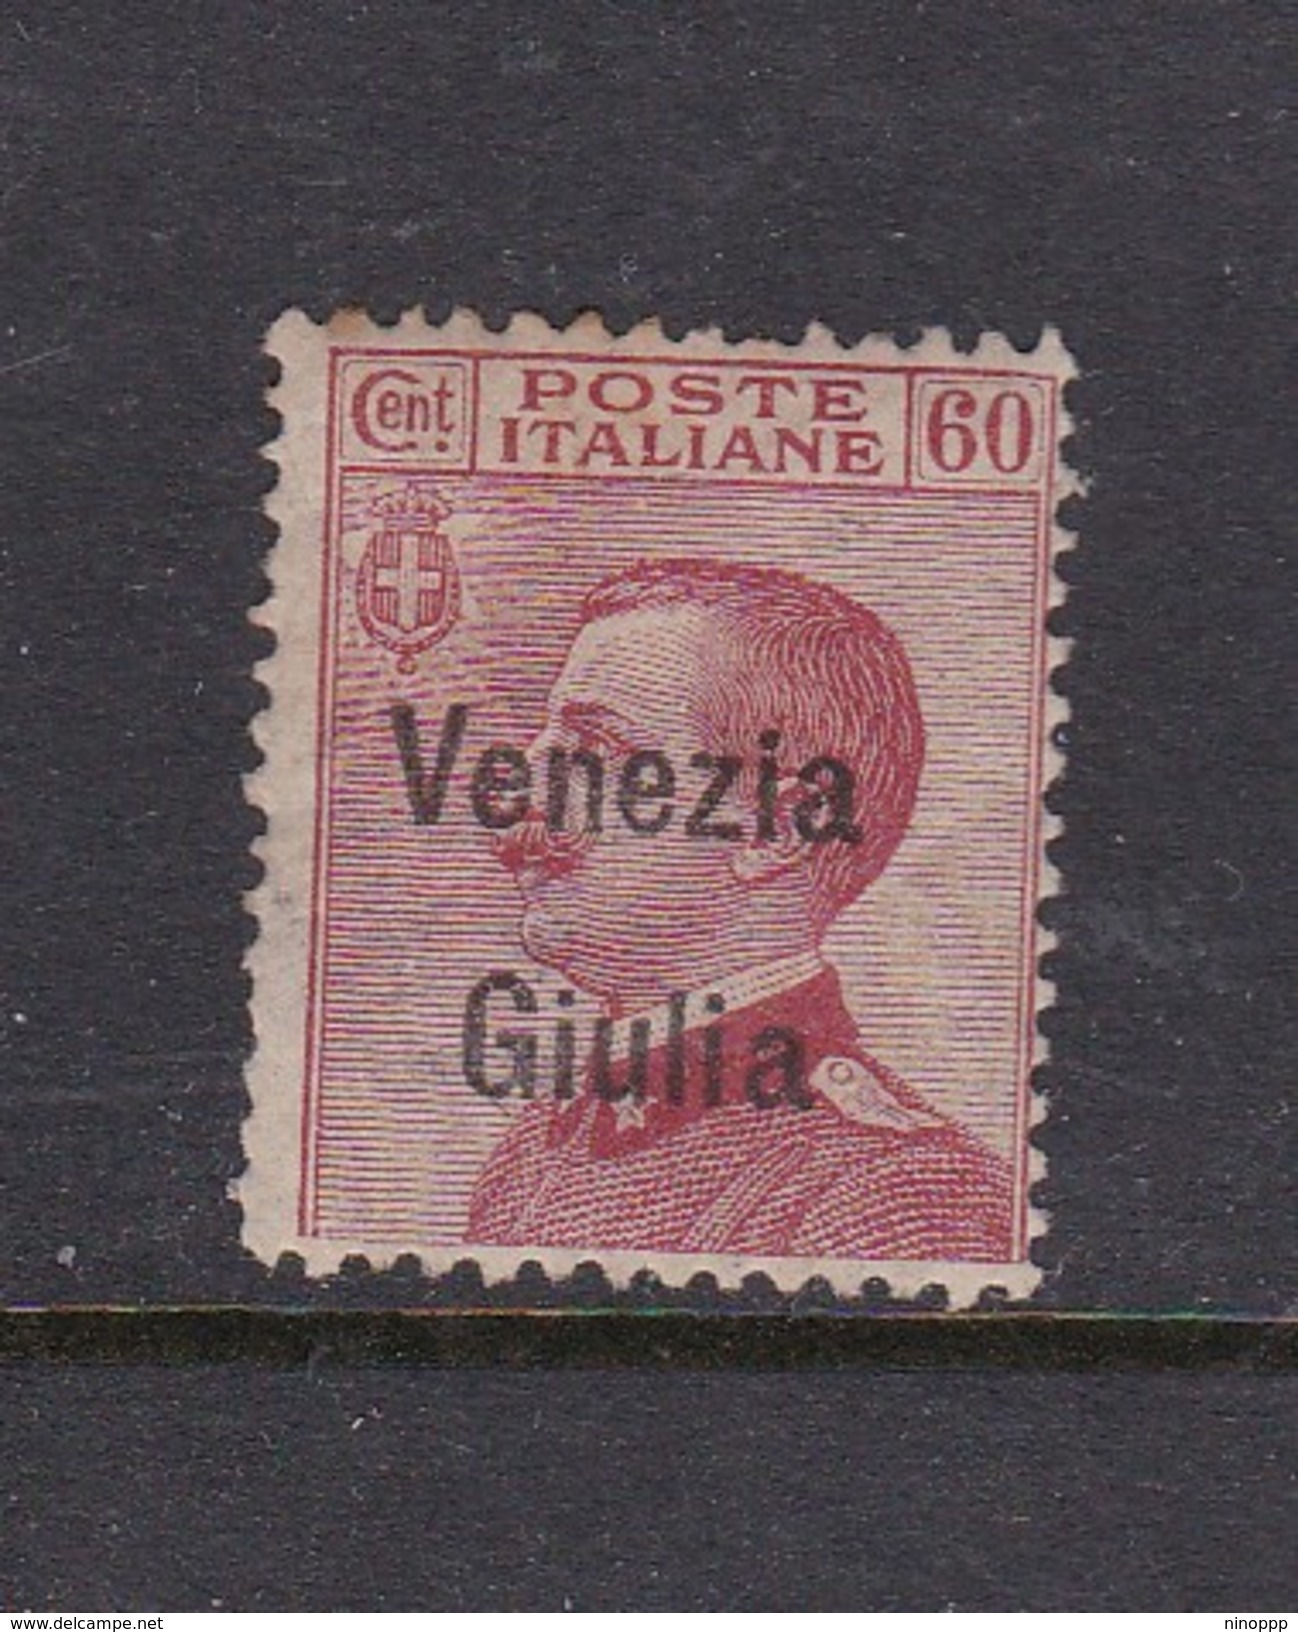 Venezia Giulia N29 1918 Italian Stamps Overprinted 60c Brown Caermine Mint Hinged - Austrian Occupation